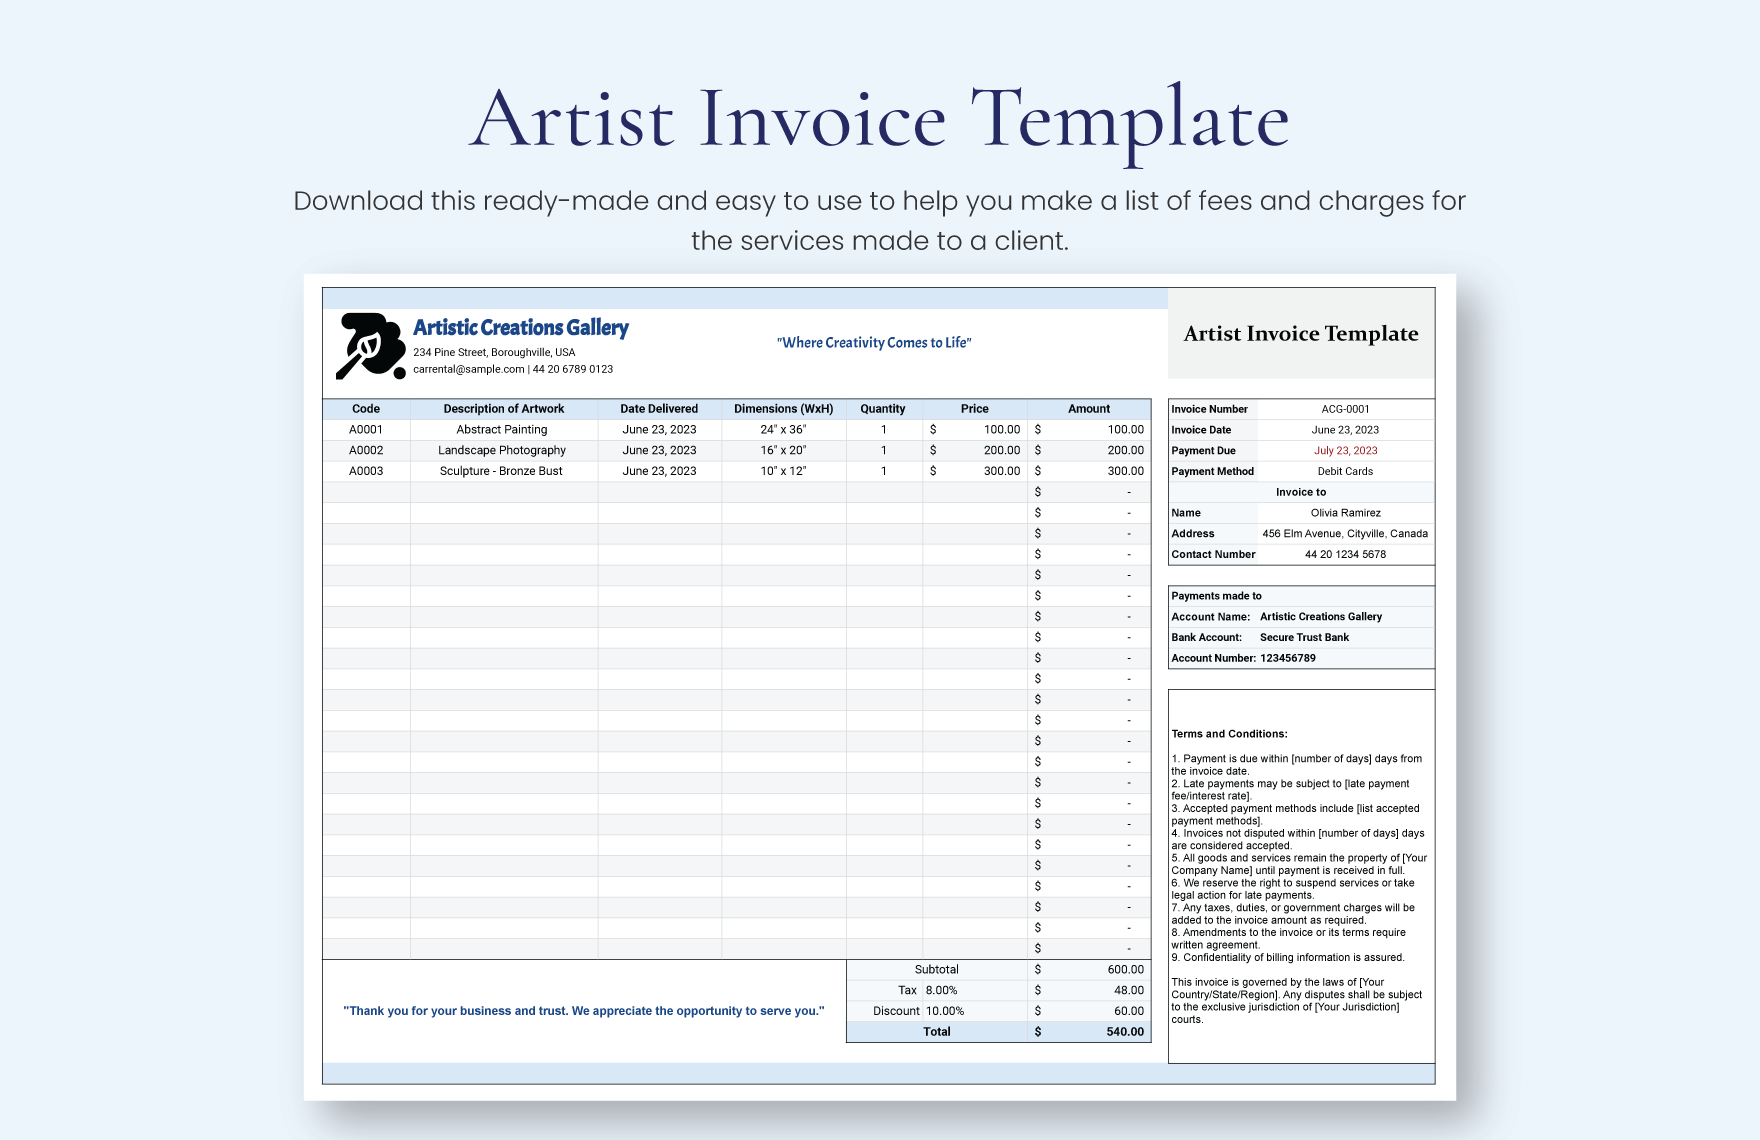 Artist Invoice Template